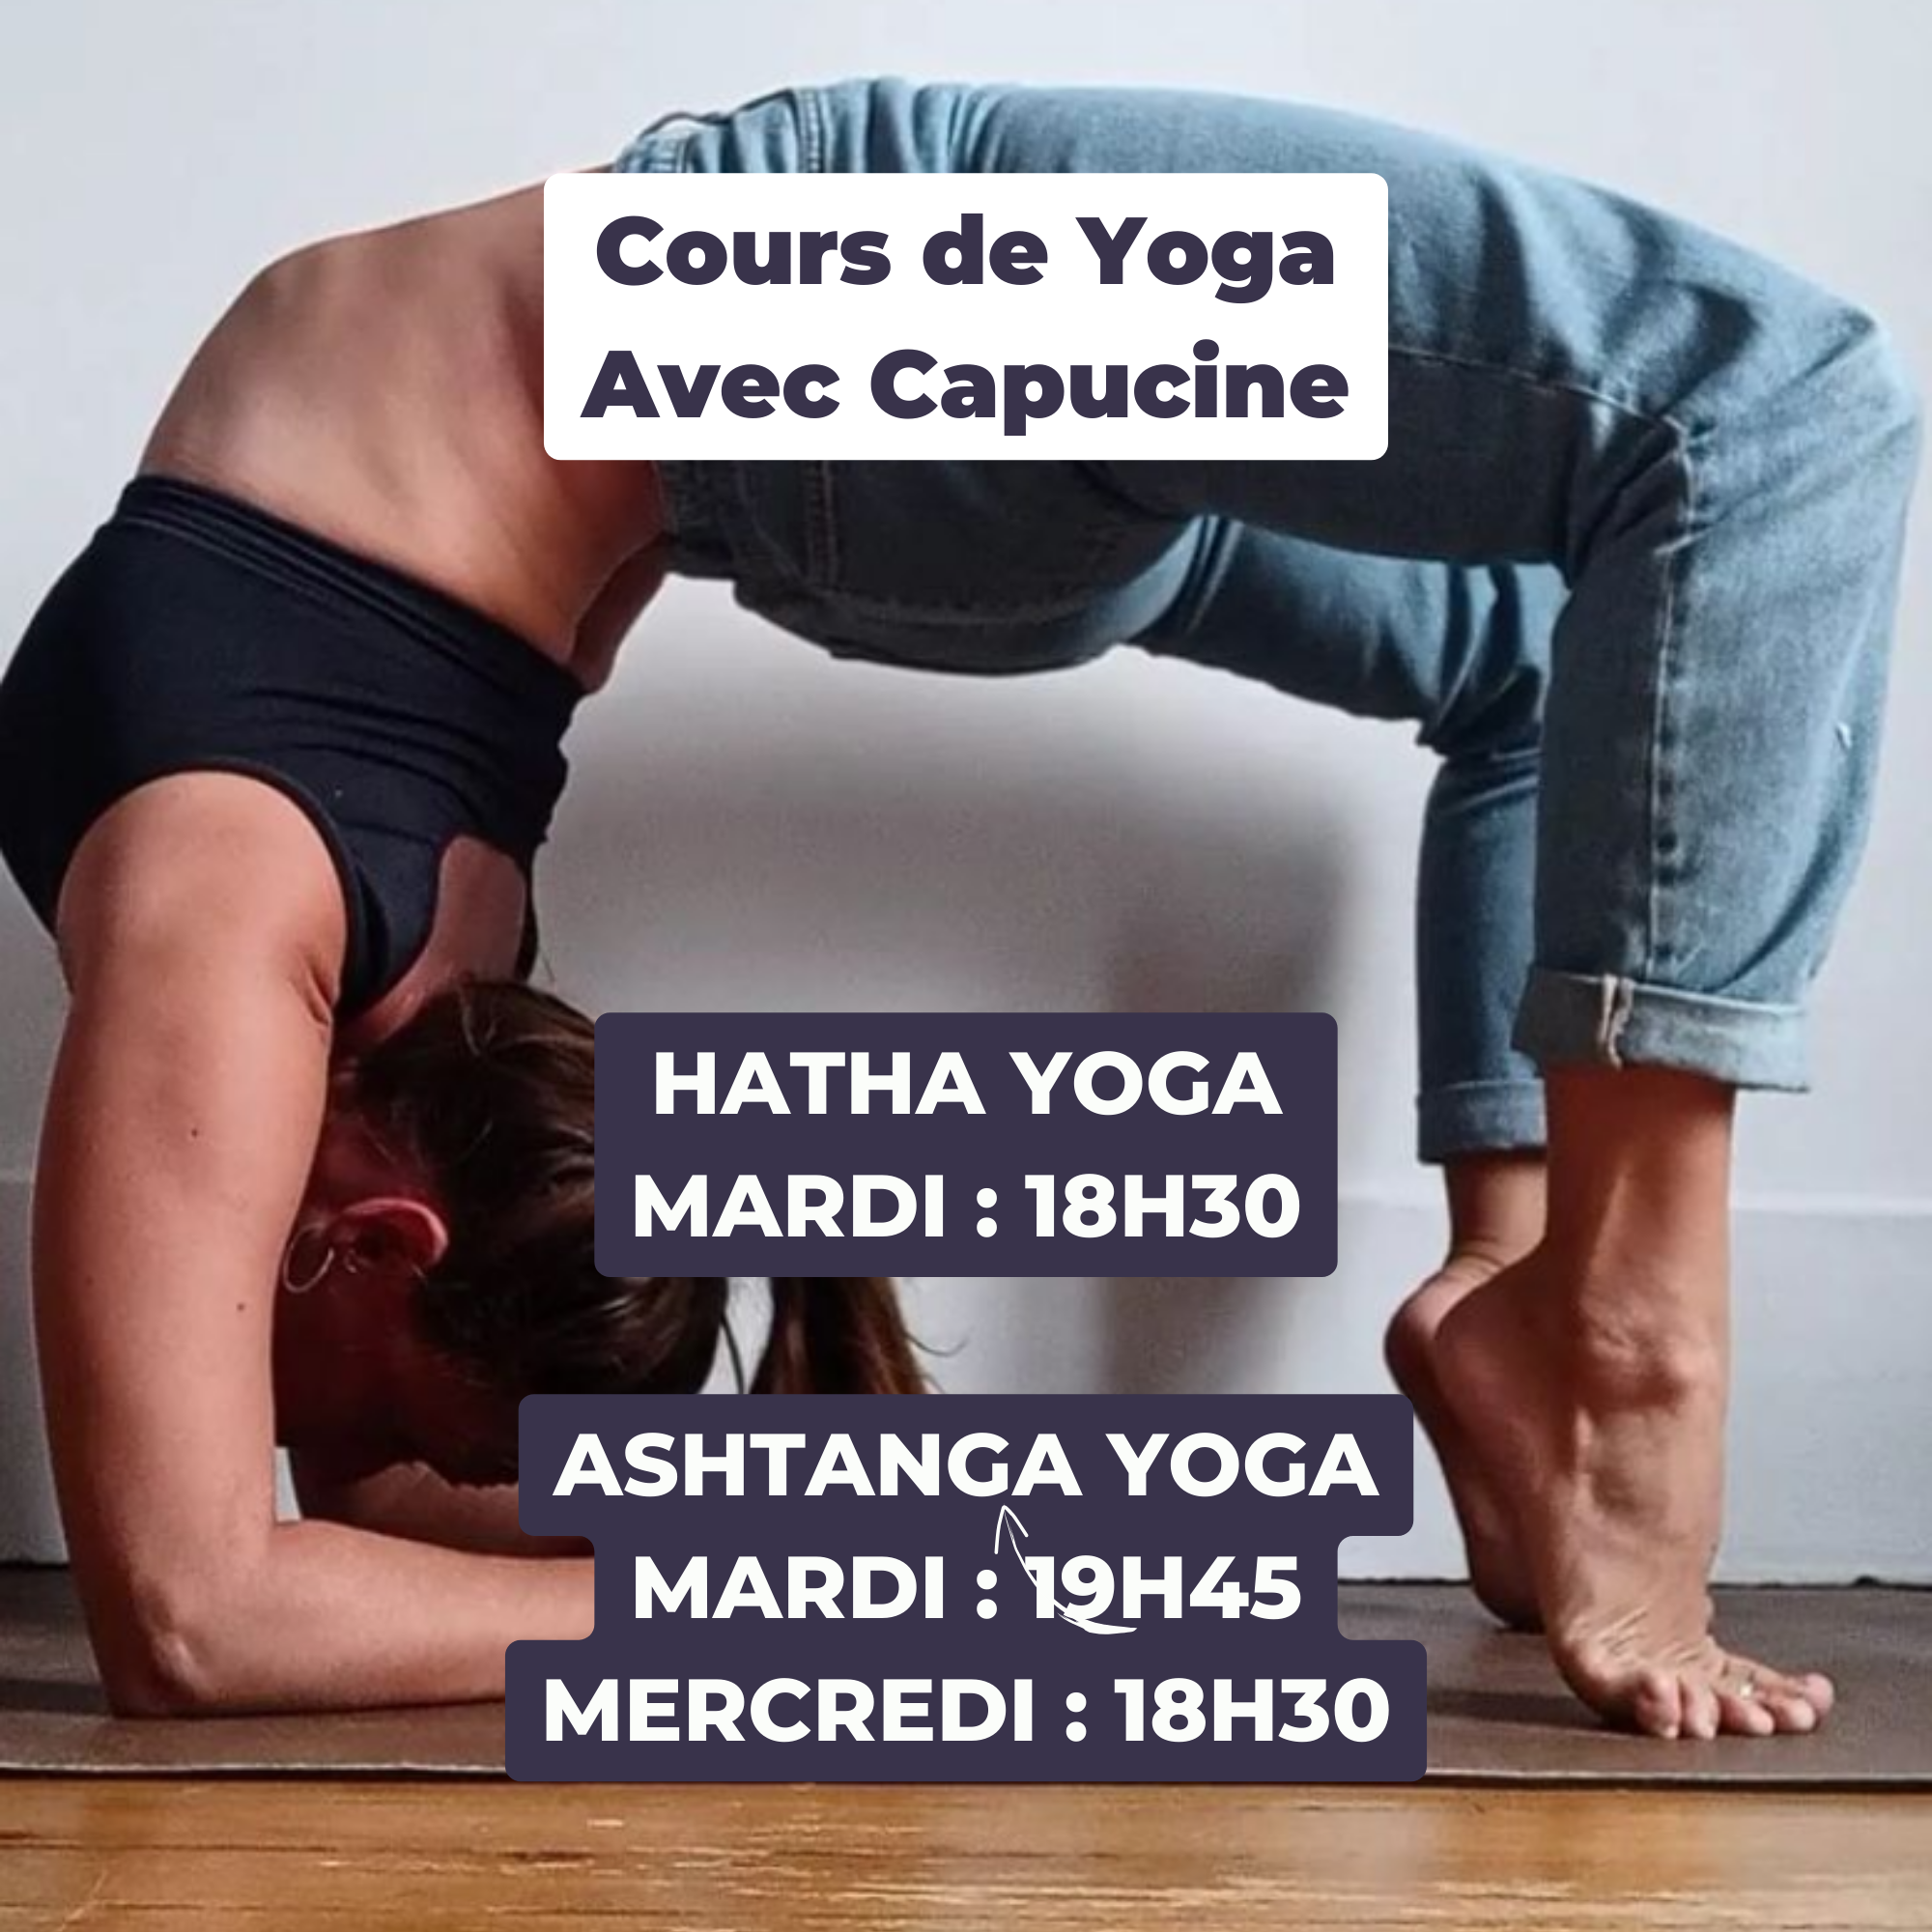 Yoga à Rennes avec Capucine